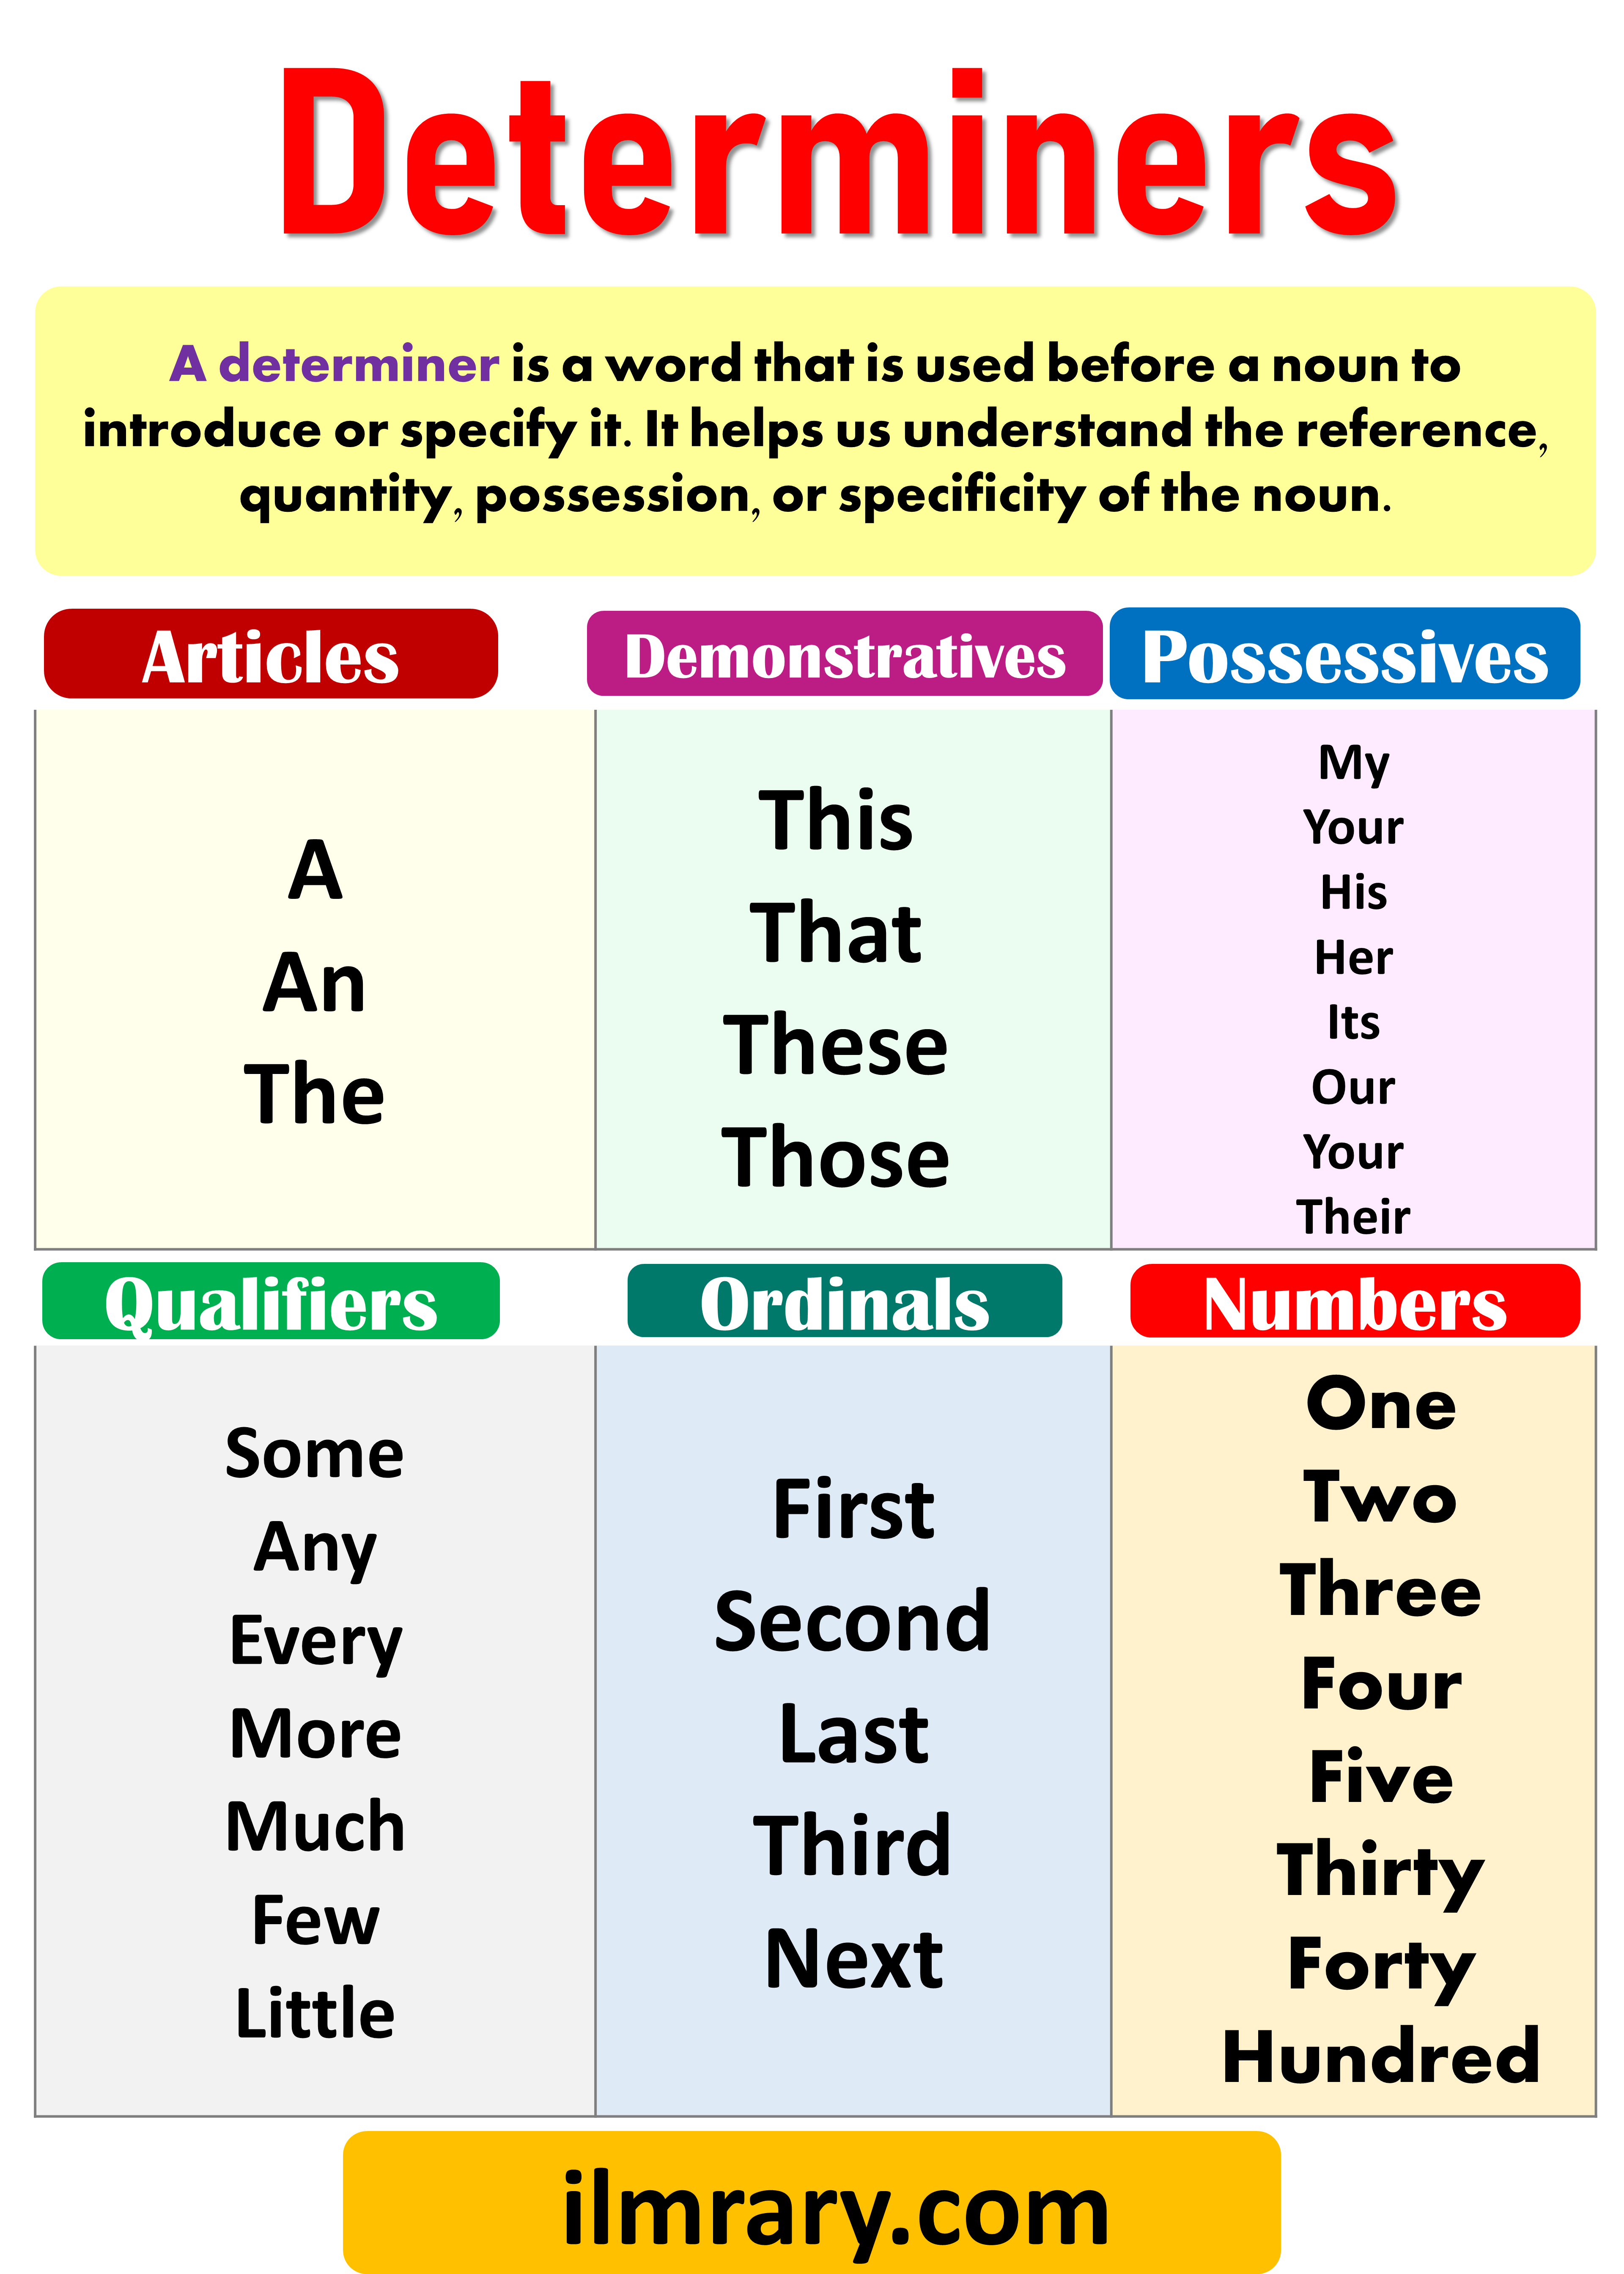 Determiner Definition and Types in English Grammar